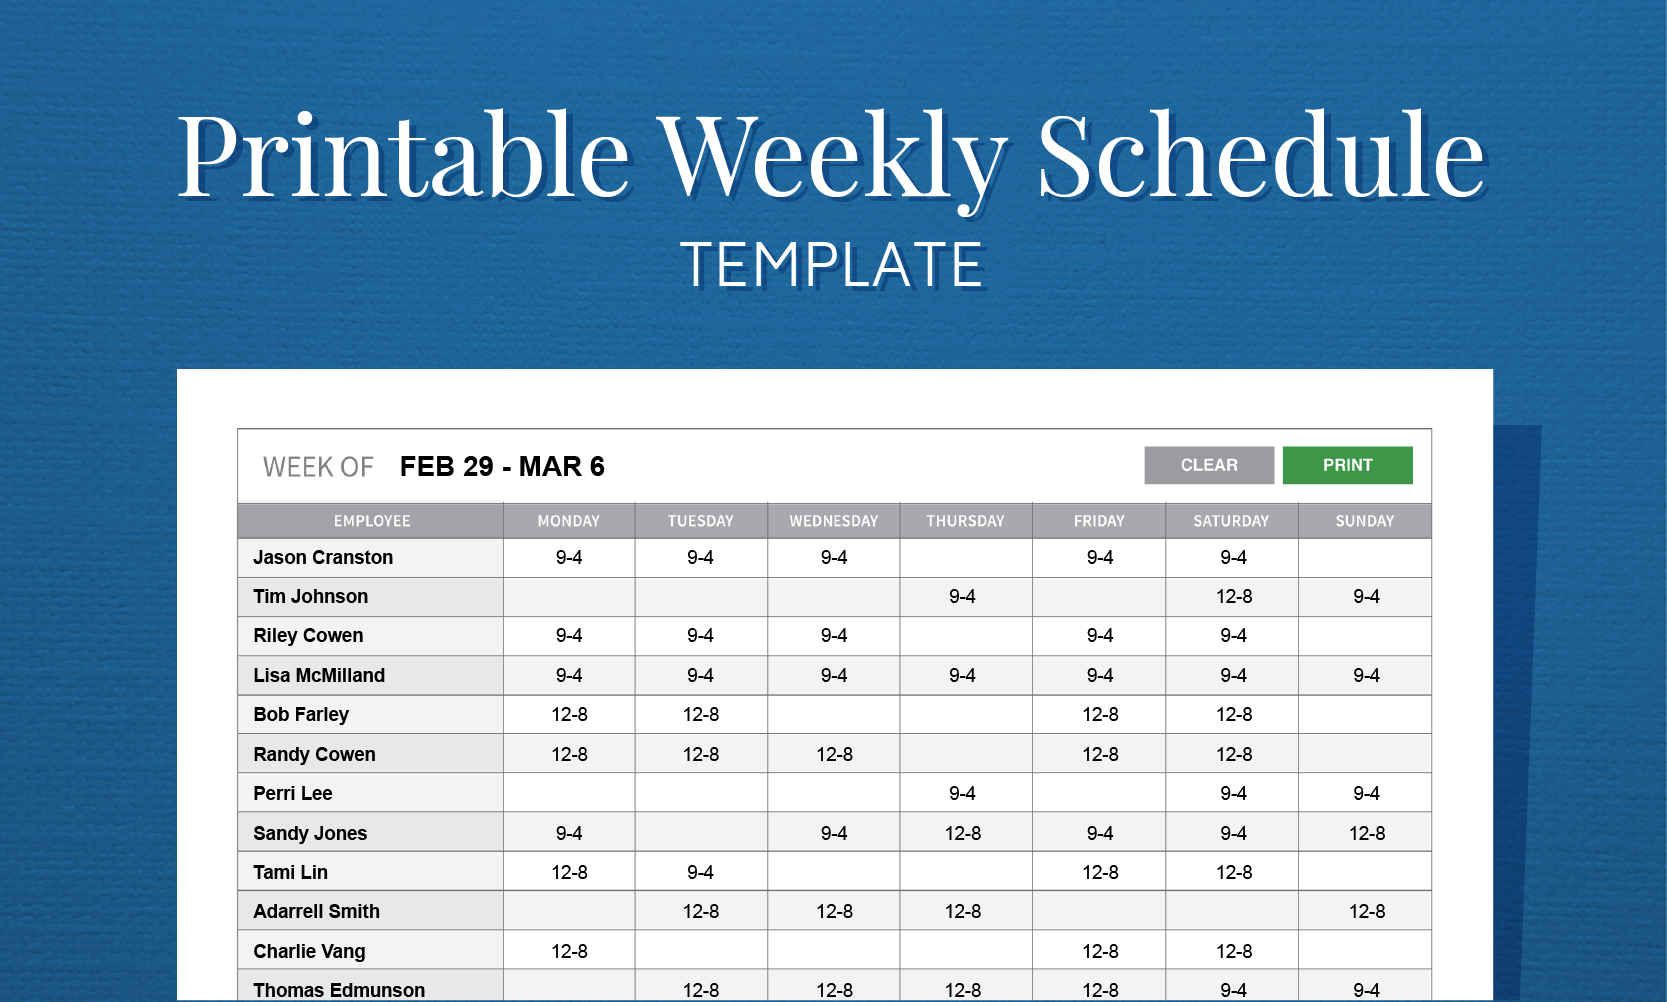 Free Printable Weekly Work Schedule Template For Employee Scheduling - Free Printable Monthly Work Schedule Template